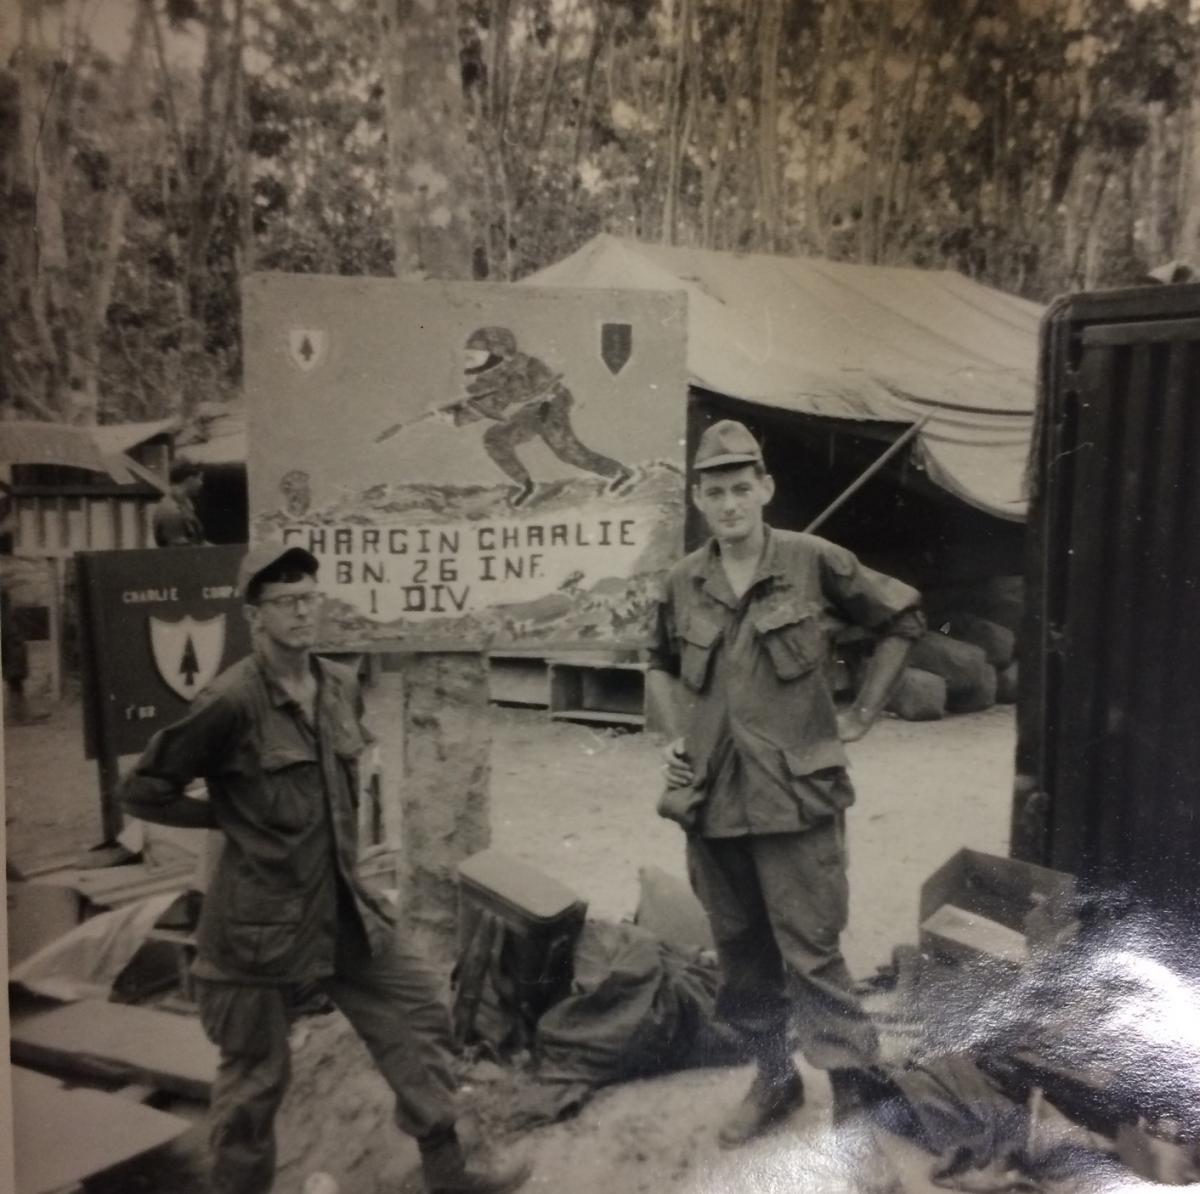 Joel Laufman (left) and Dennis Connors  (right) in Vietnam circa 1968.